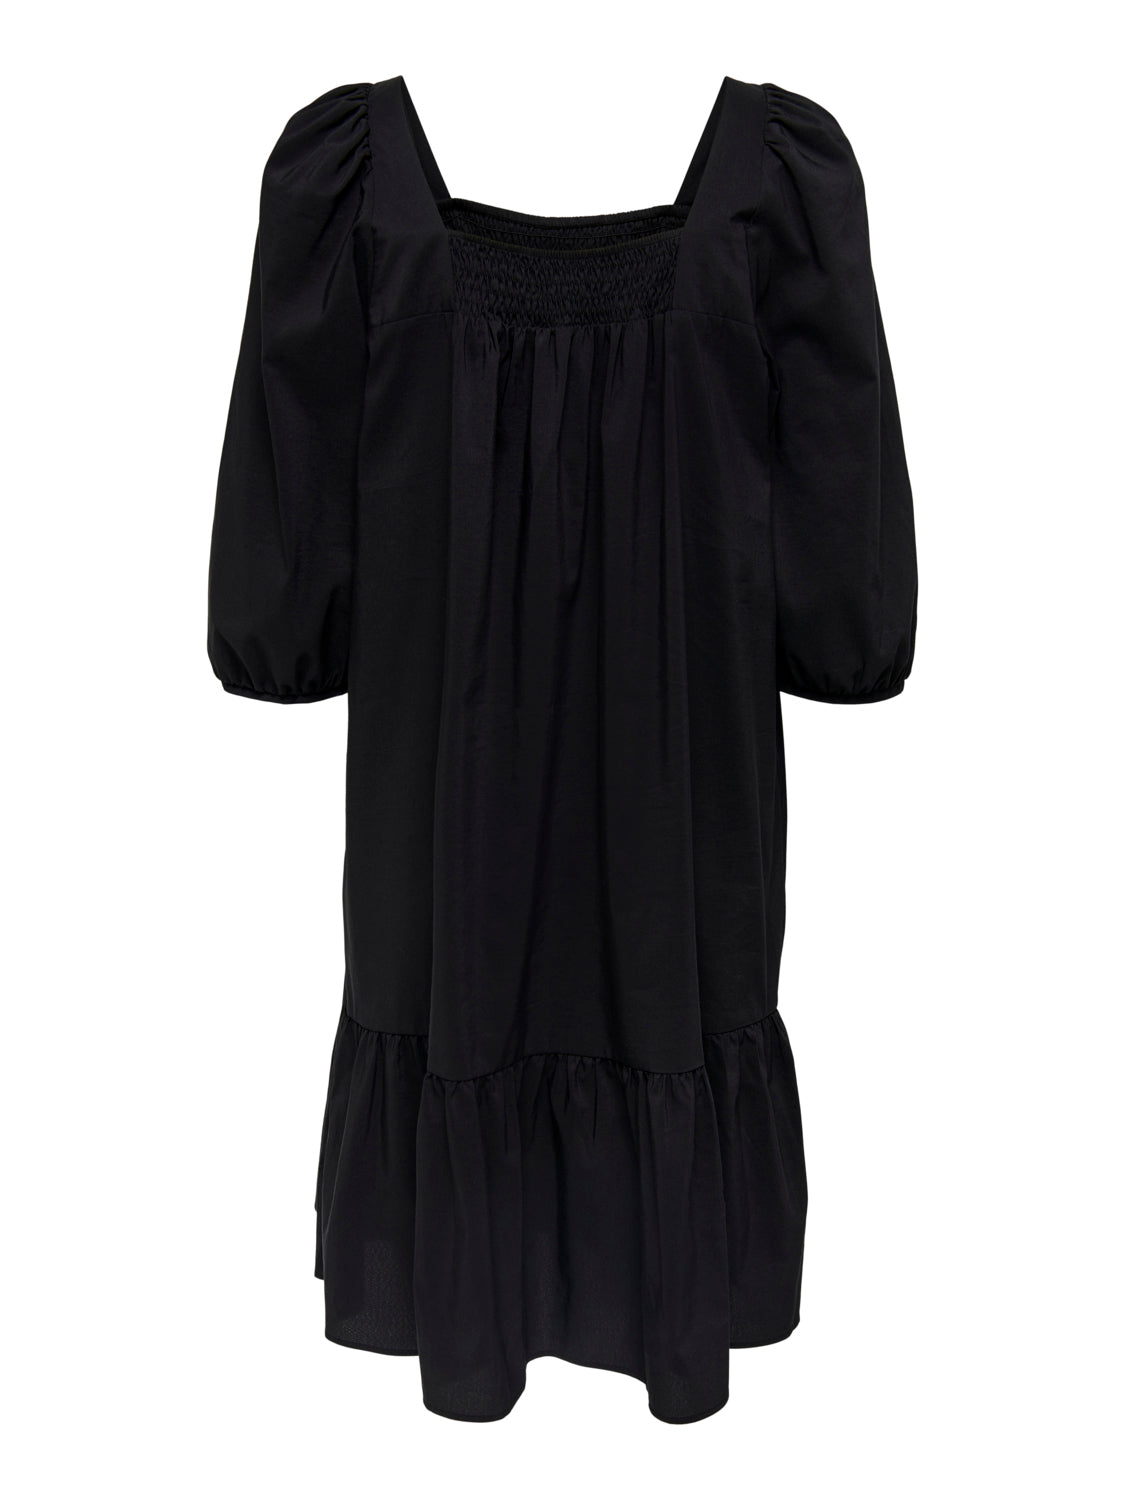 PGNEW Dress - Black